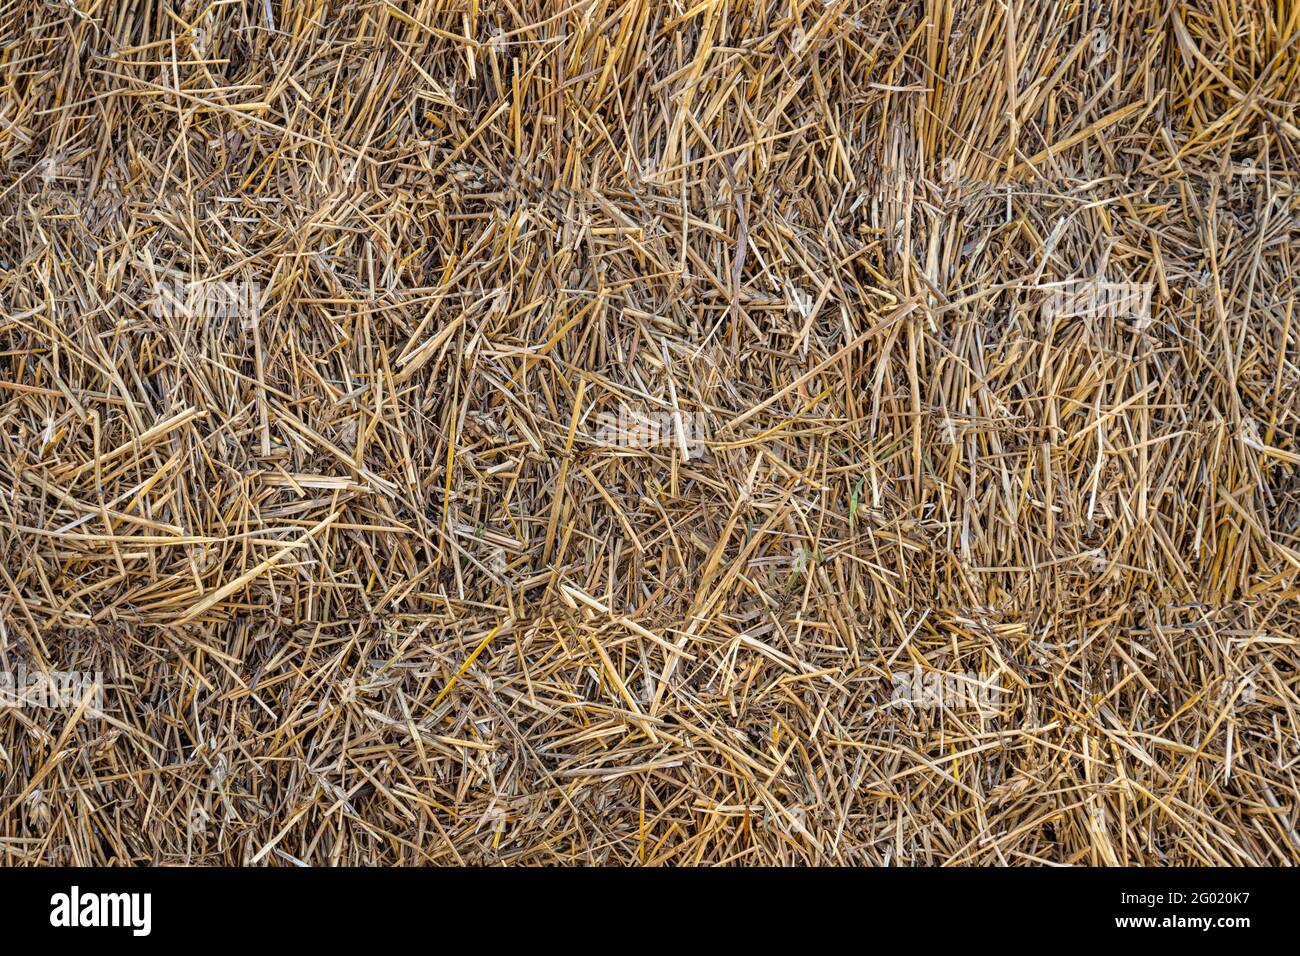 Straw, Dry Straw, Hay Straw Yellow Background Texture Stock Photo - Image  of feed, farm: 112238112